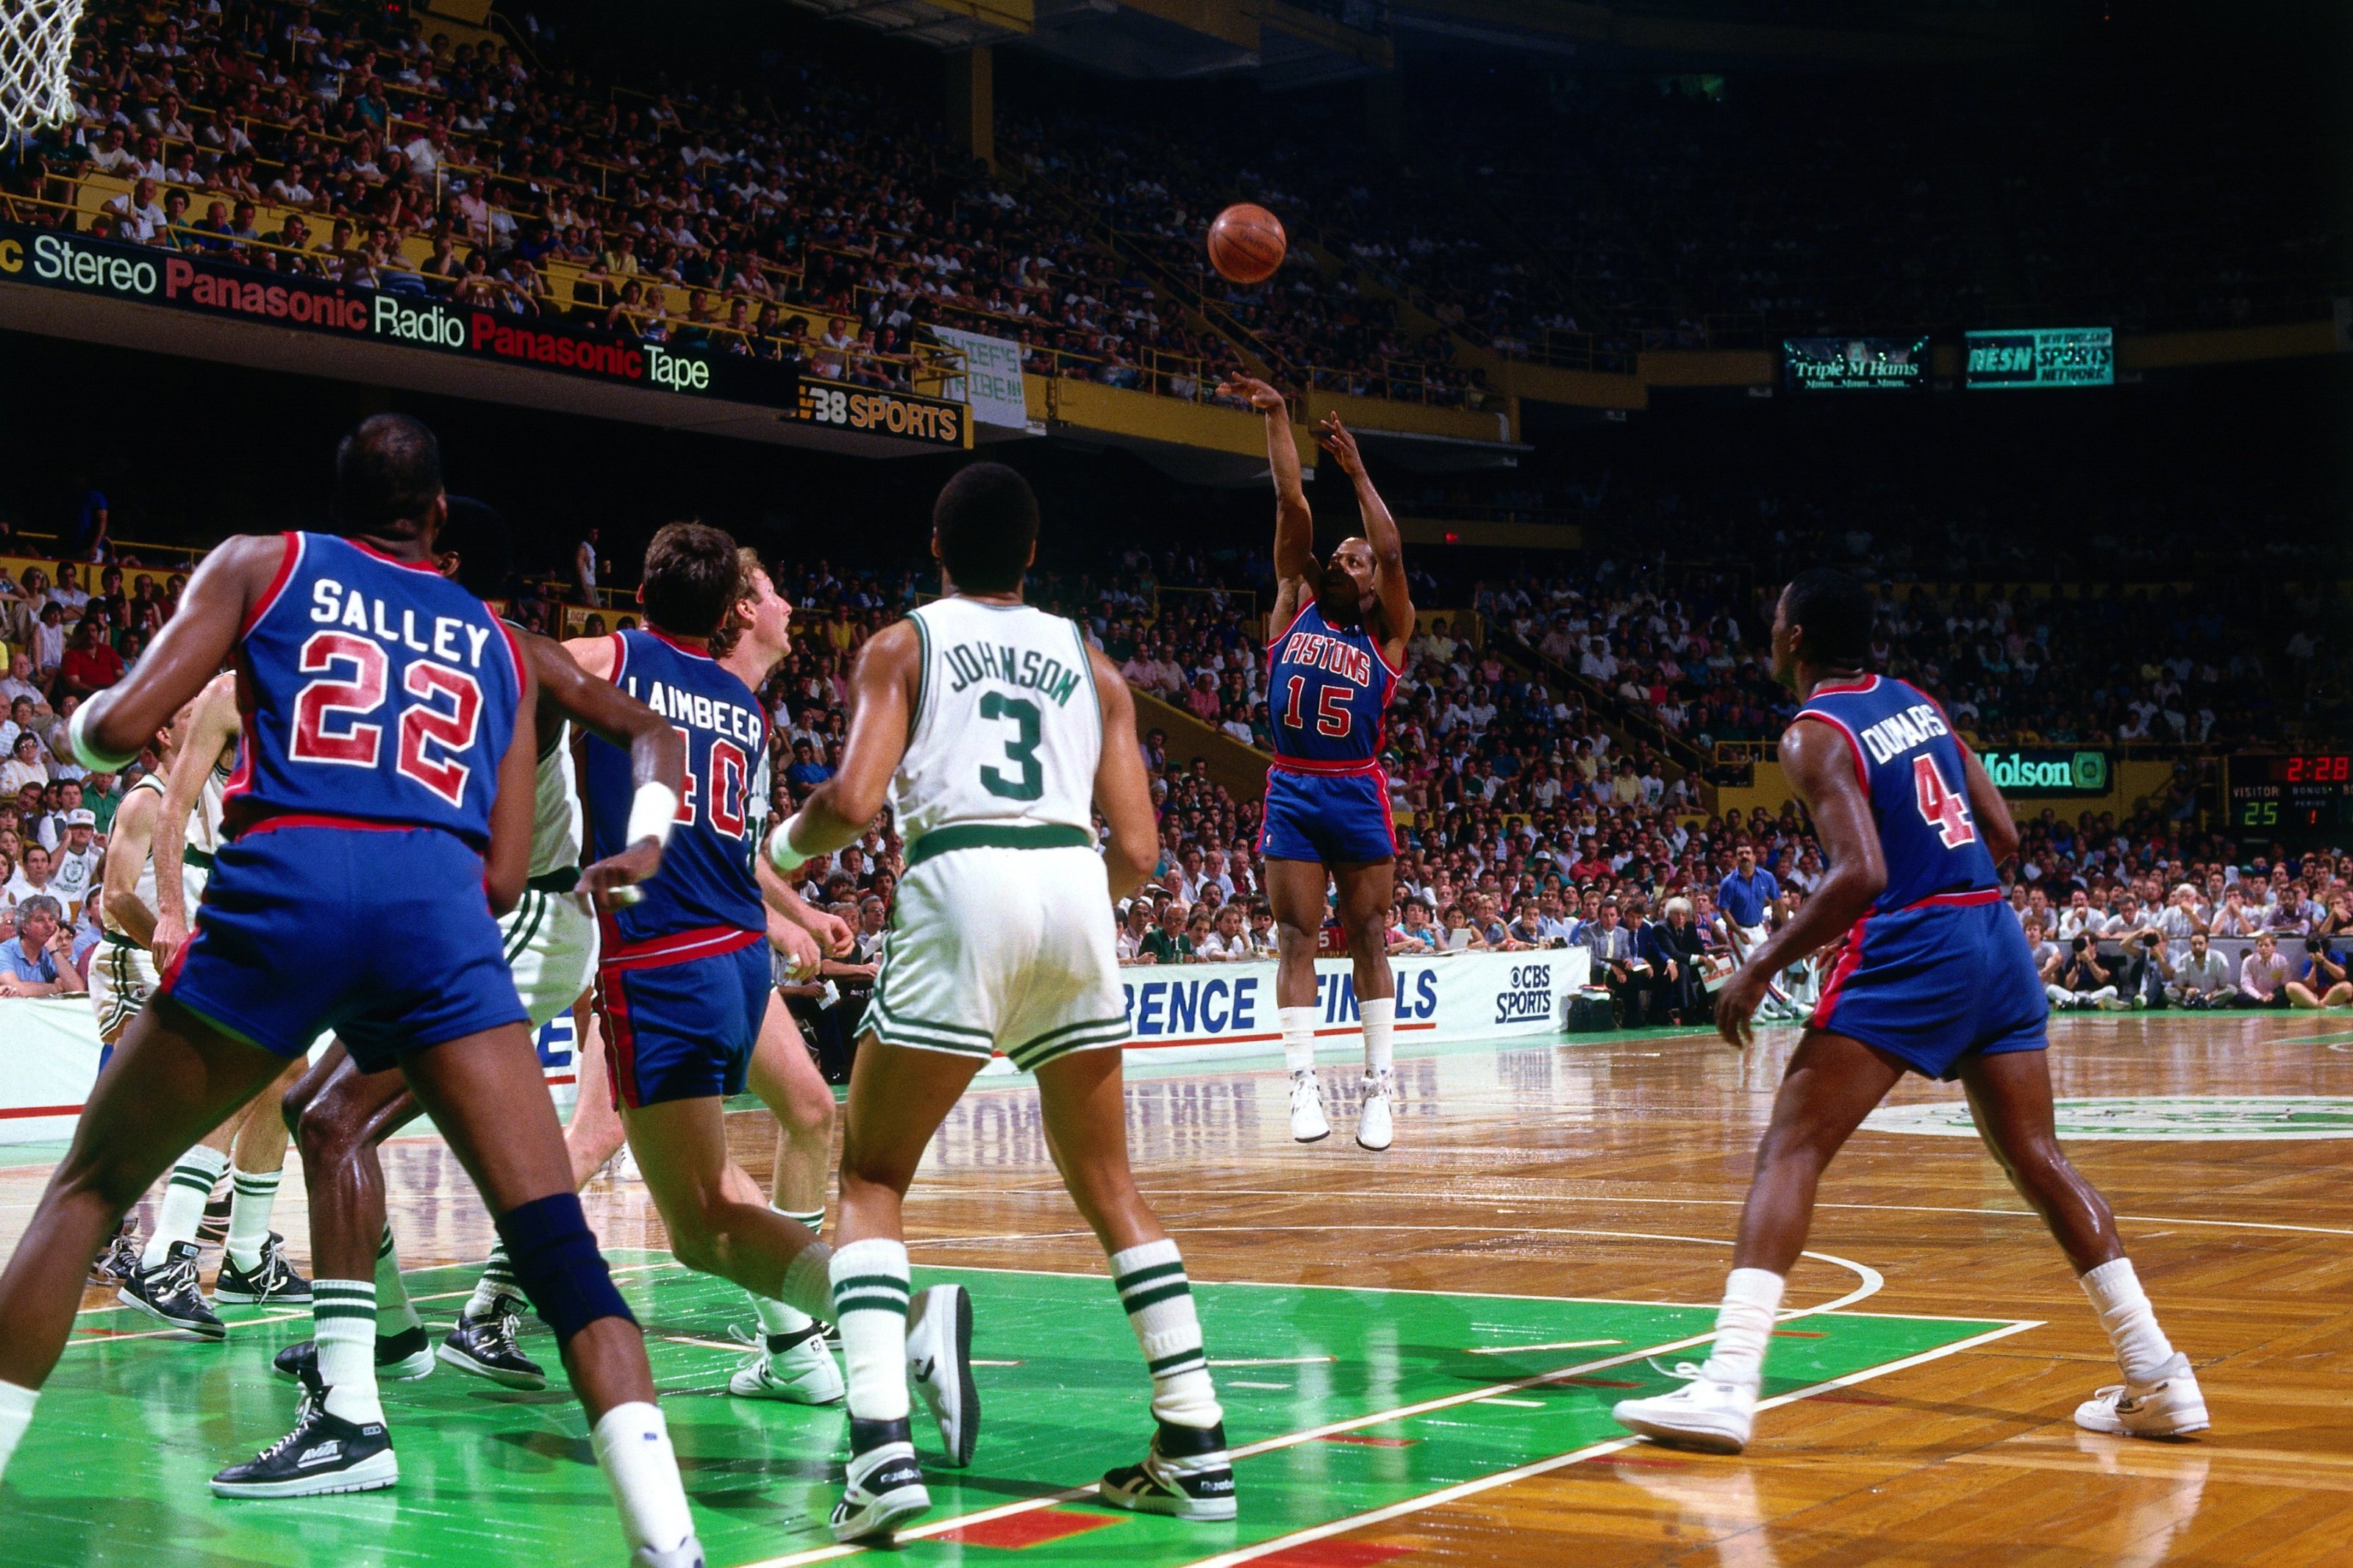 1989-90 Vinnie Johnson Game Worn & Signed Detroit Pistons Jersey